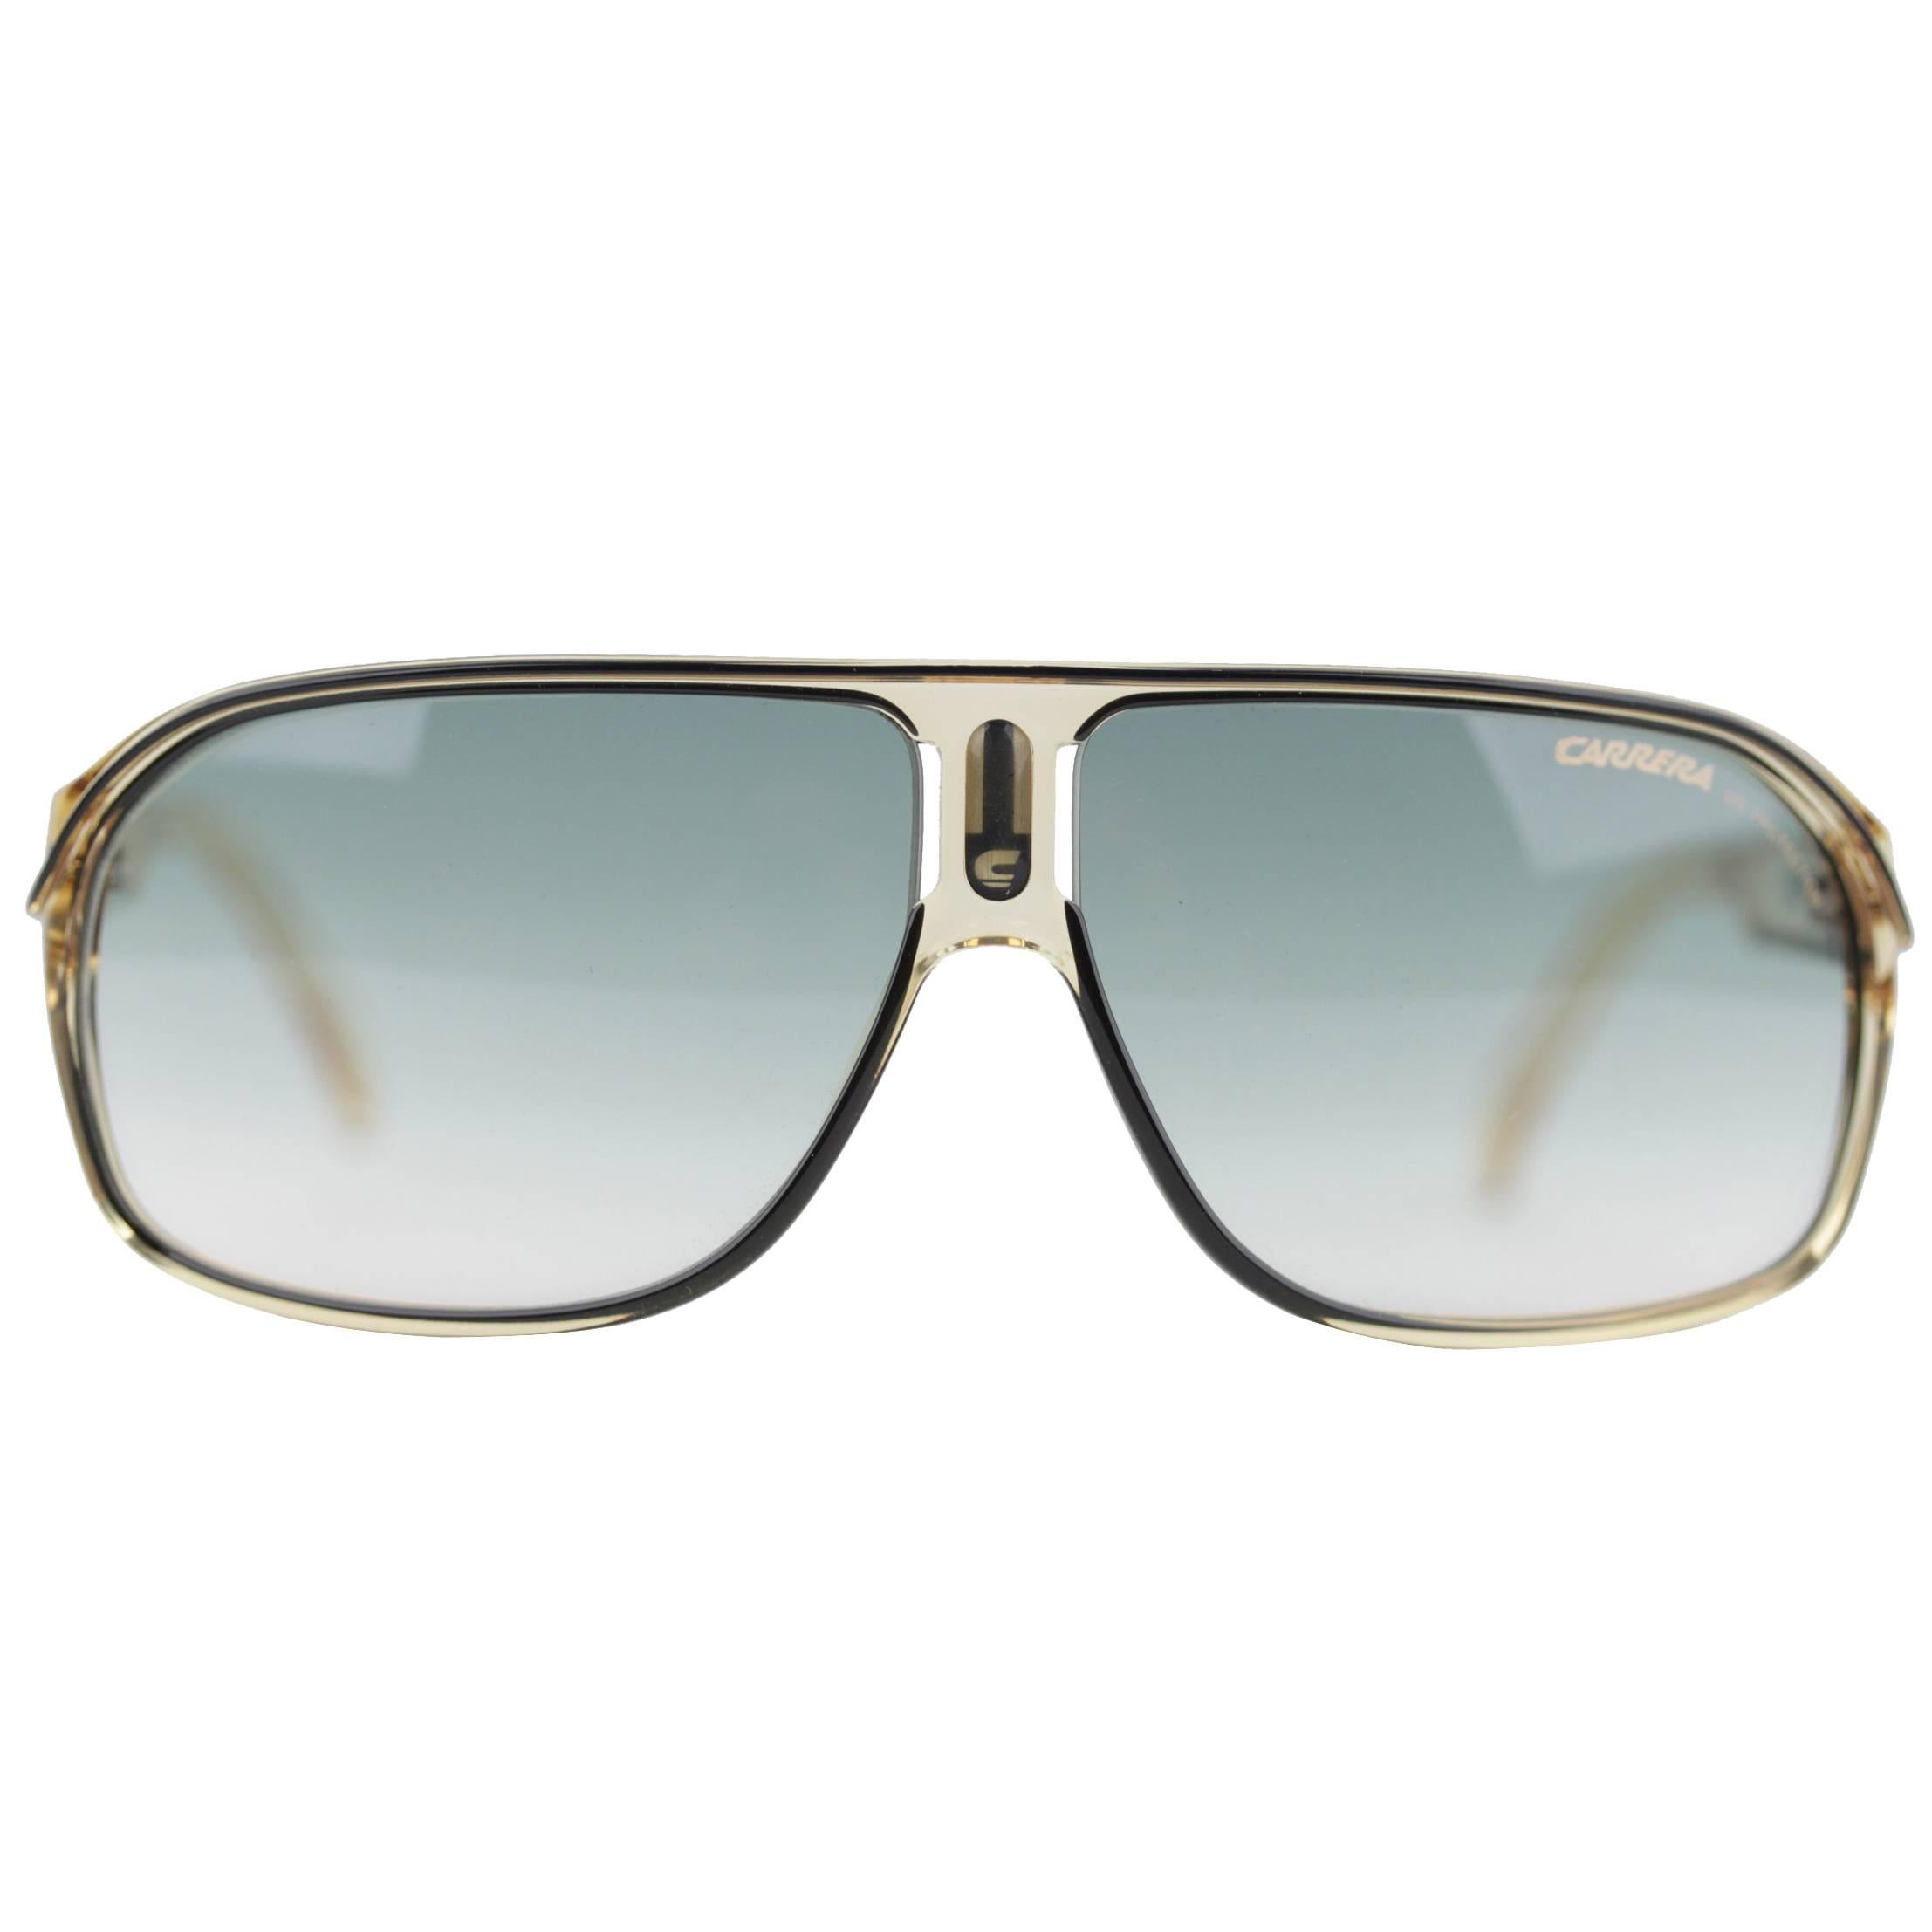 CARRERA Sunglasses JOLLY/M BIO 7L Green GRADIENT Lens Eyewear OPTYL Shades